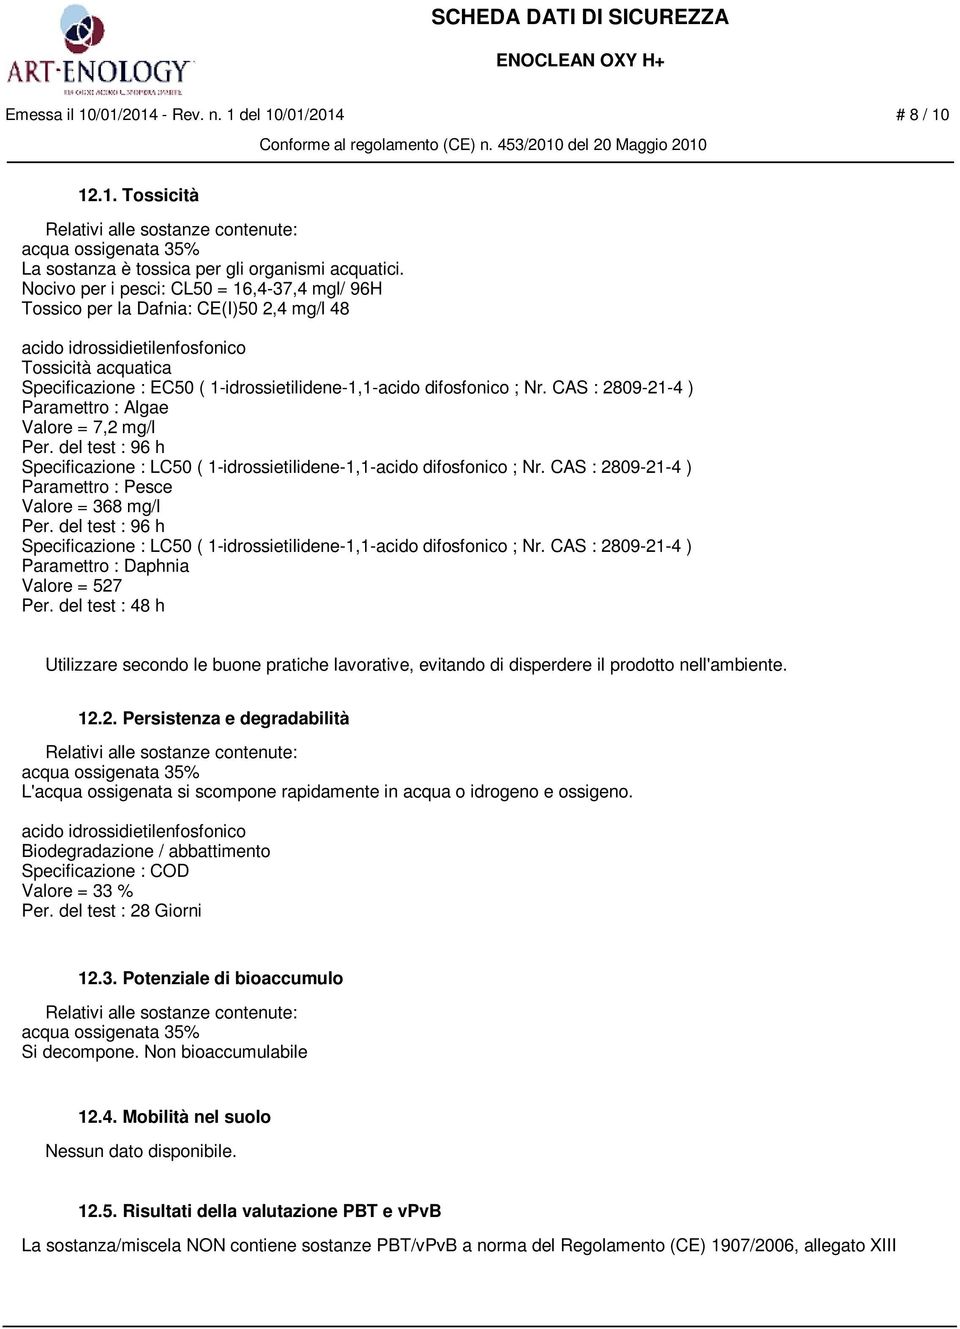 difosfonico ; Nr. CAS : 2809-21-4 ) Paramettro : Algae Valore = 7,2 mg/l Per. del test : 96 h Specificazione : LC50 ( 1-idrossietilidene-1,1-acido difosfonico ; Nr.